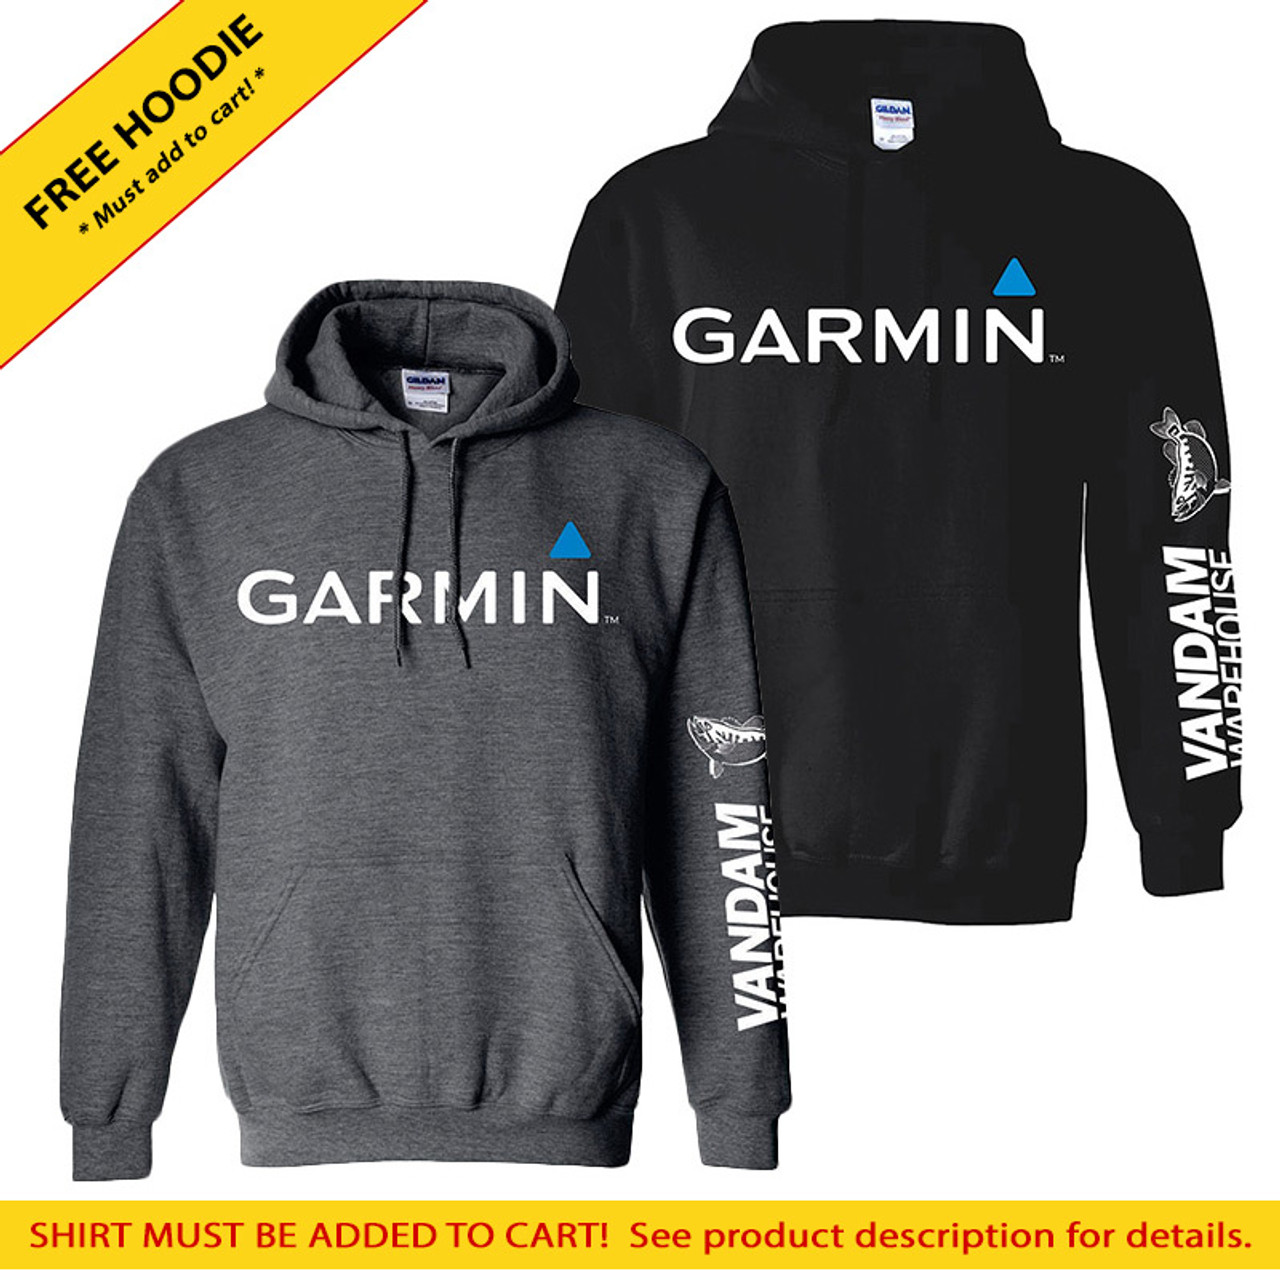 Free Garmin Logo Hoodie w/ Purchase!